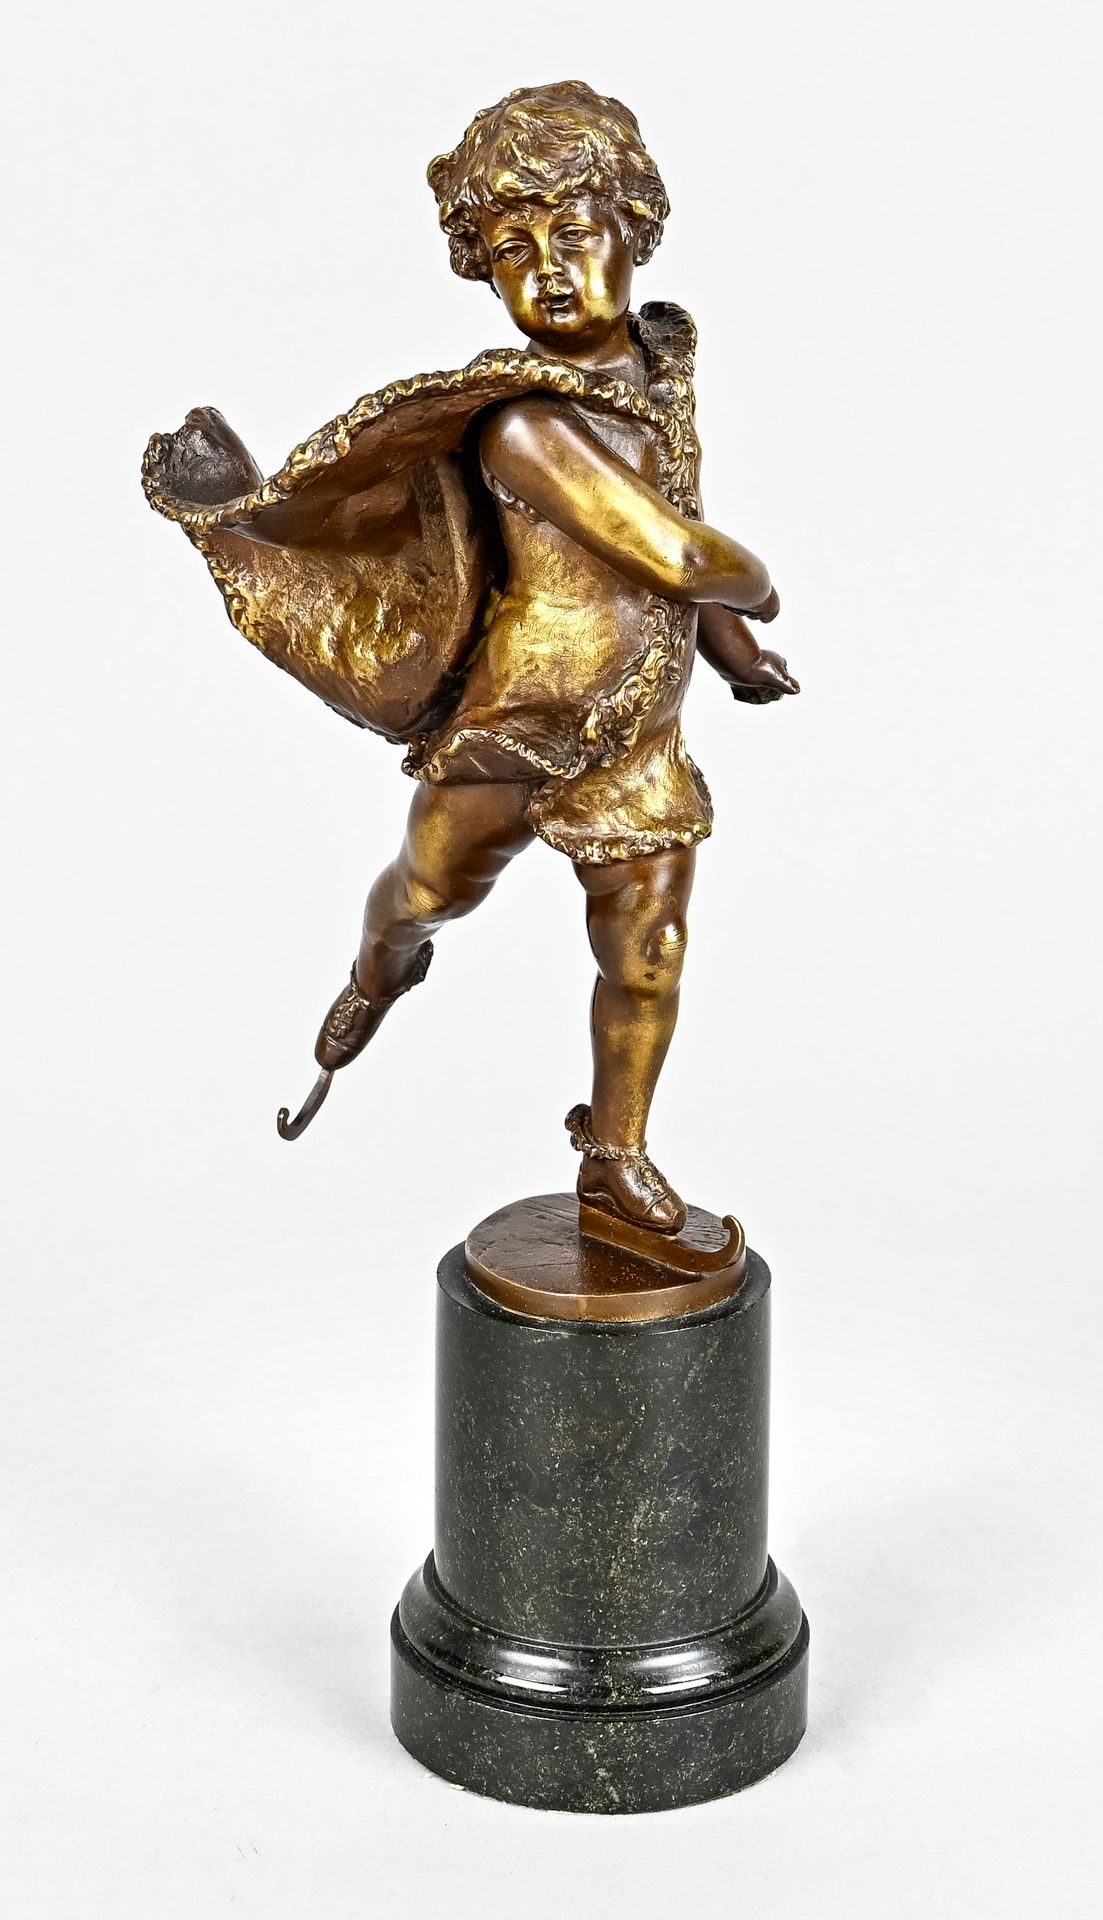 Null Monogramist "J. N.", bronze figure, France/Paris circa 1880, "Ice Skater", &hellip;